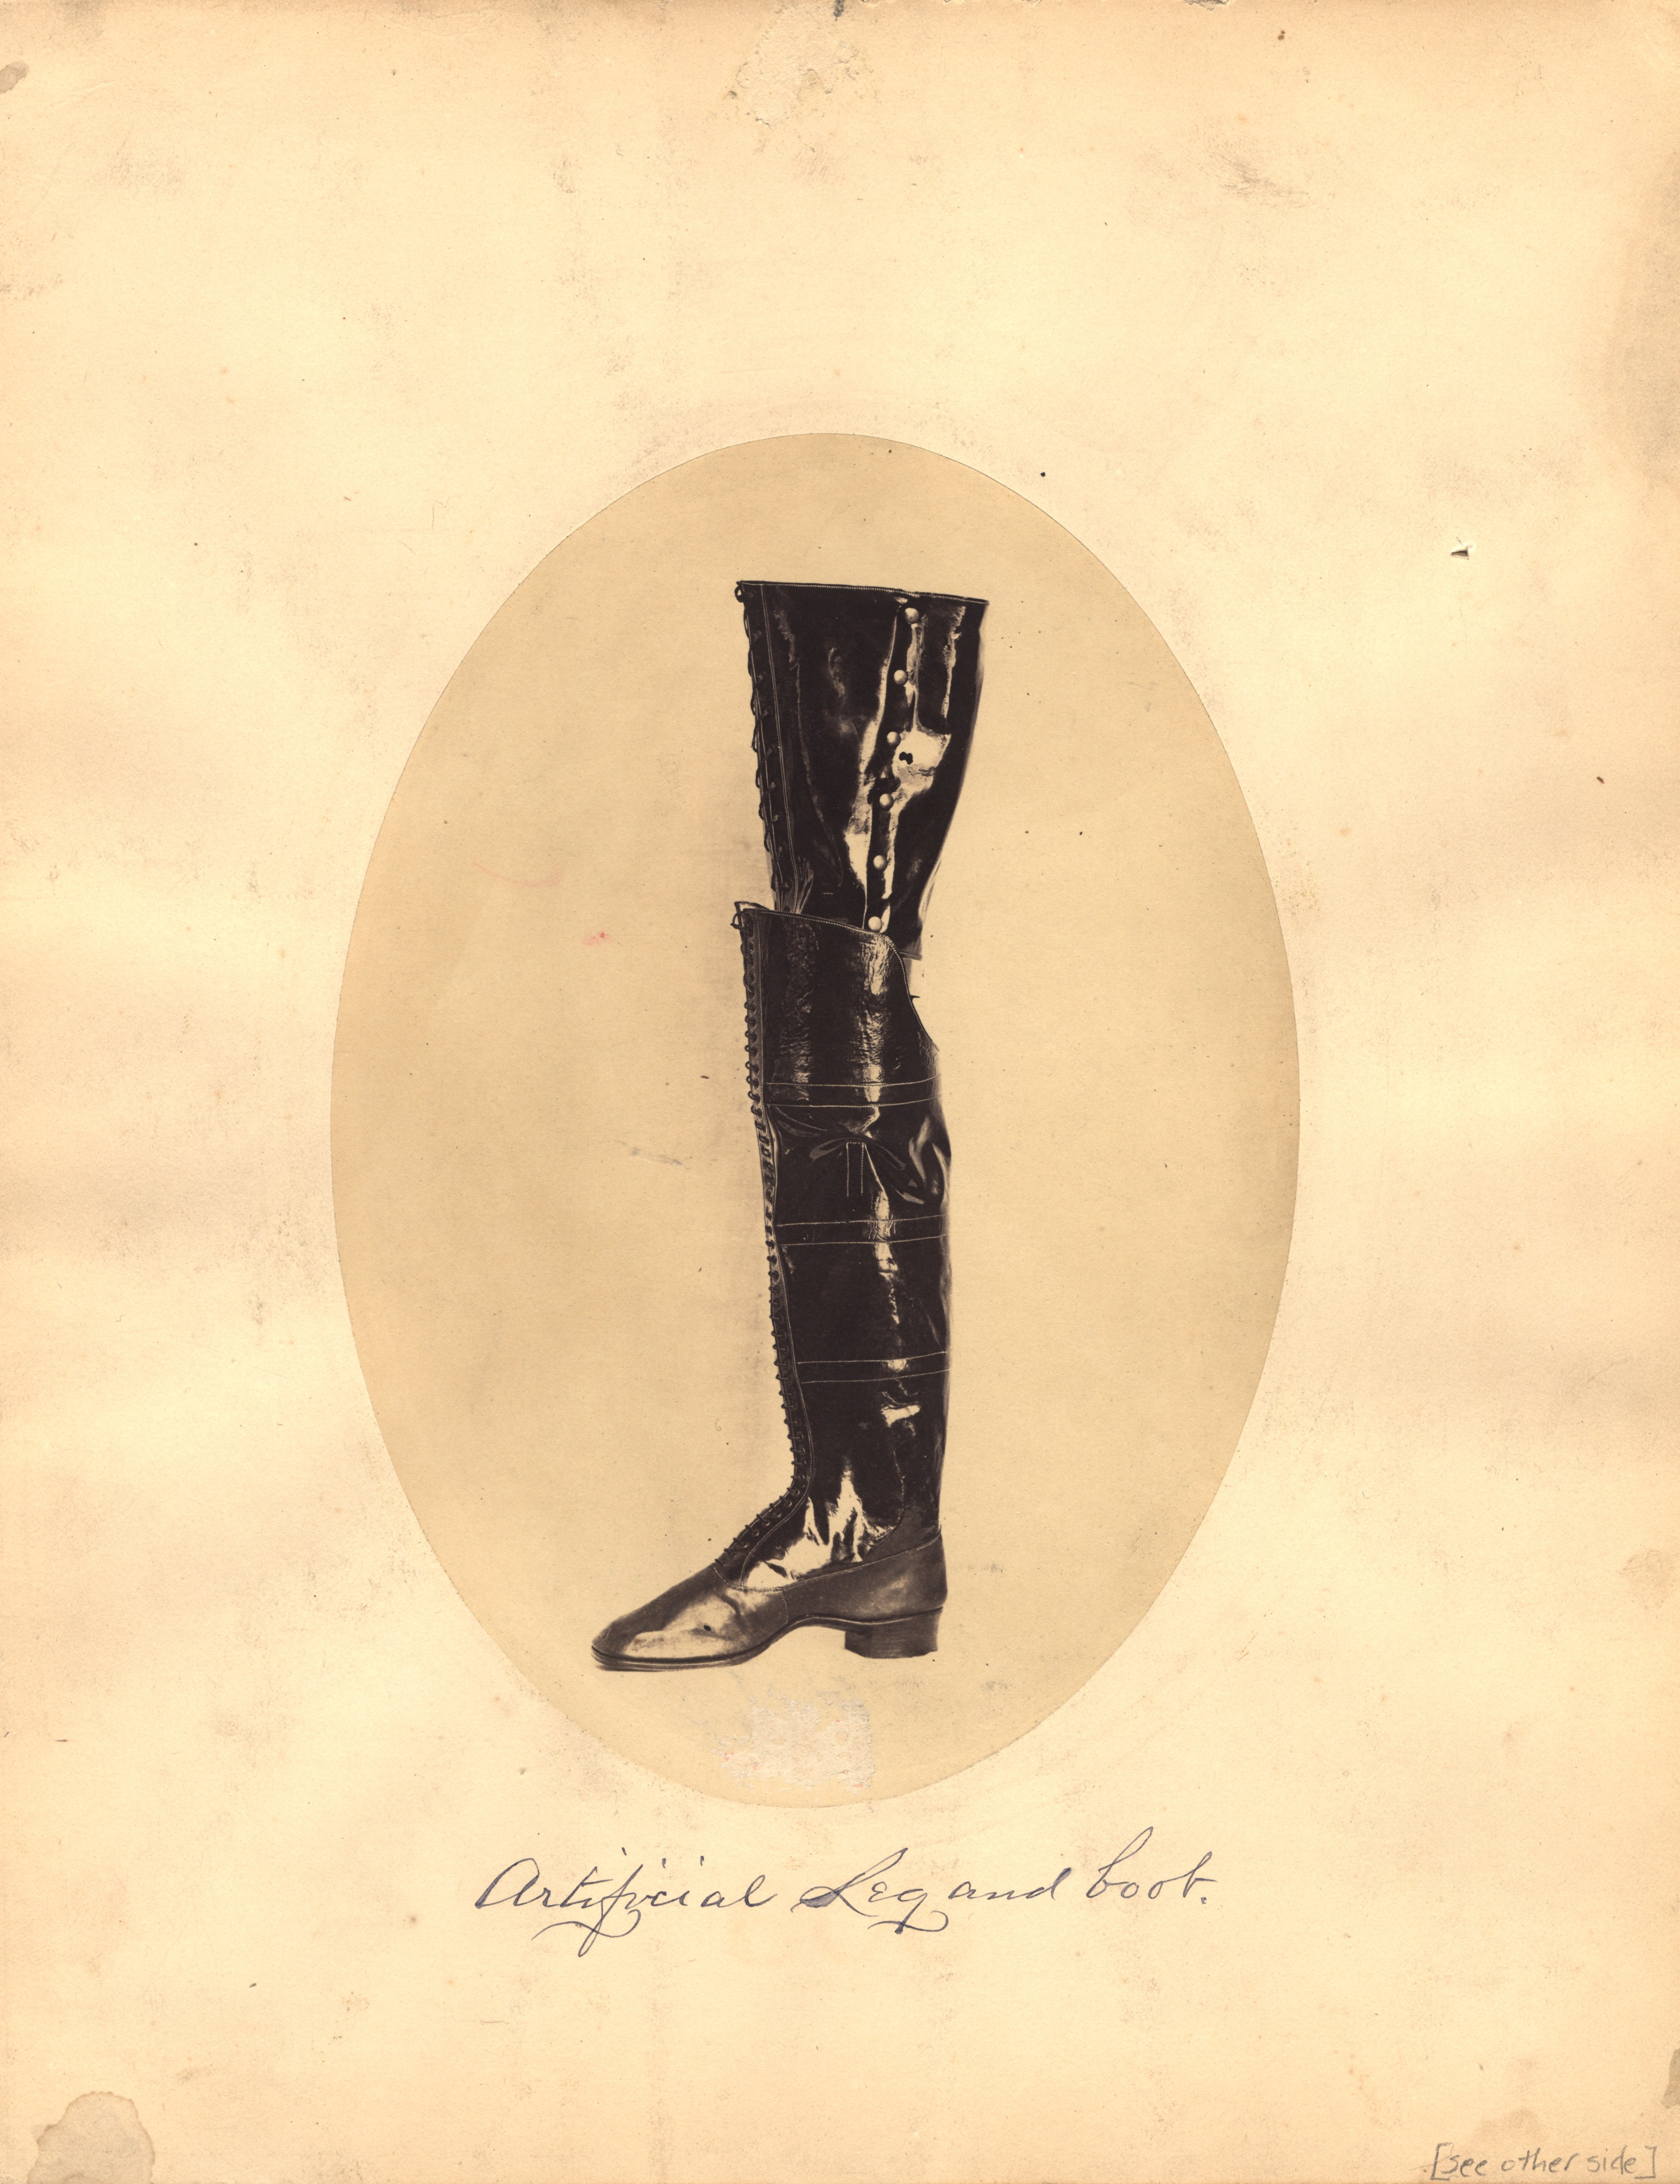 Nineteenth-century prosthetic leg